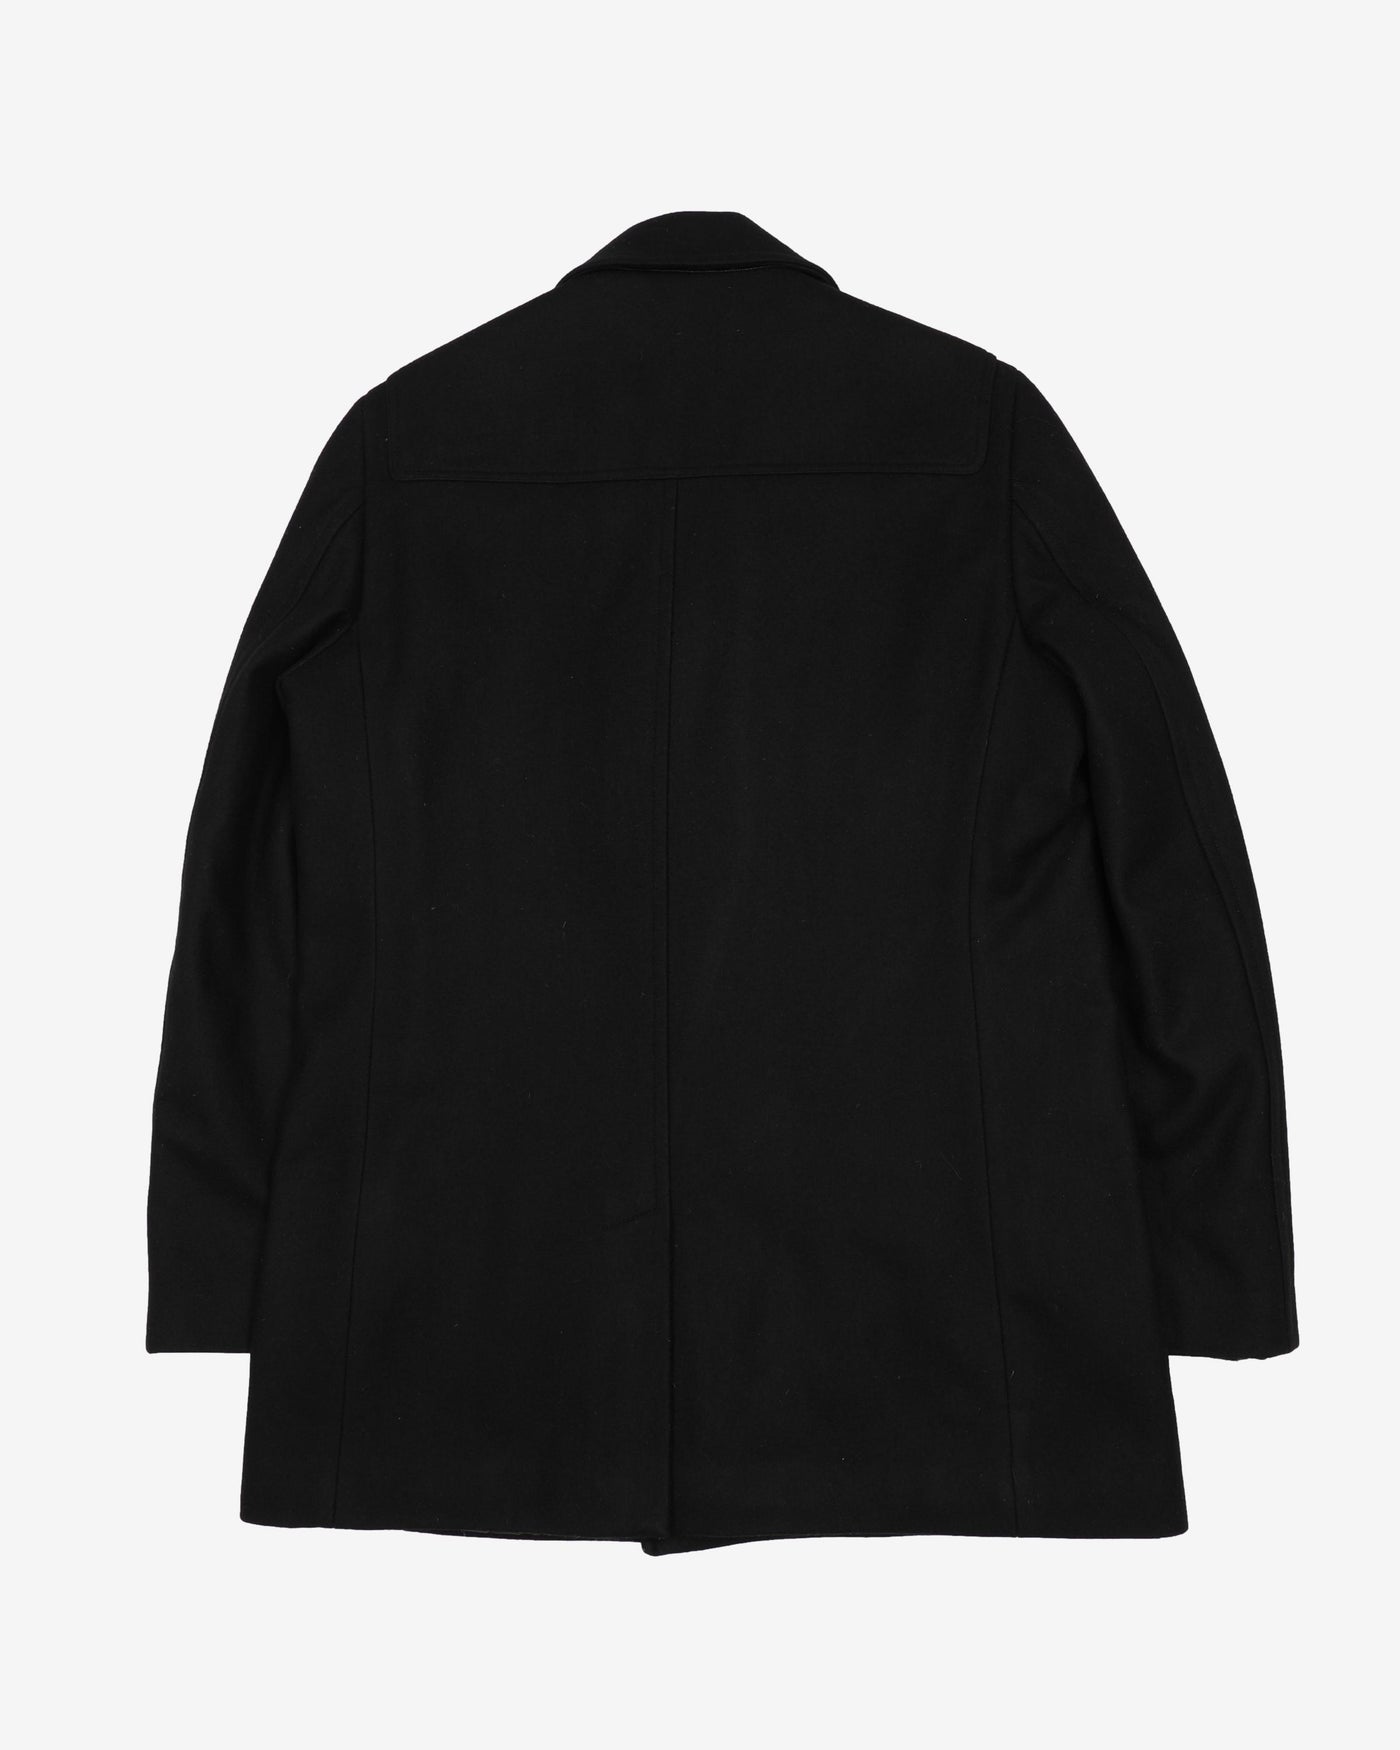 Black Wool Blend Jacket Overcoat - S